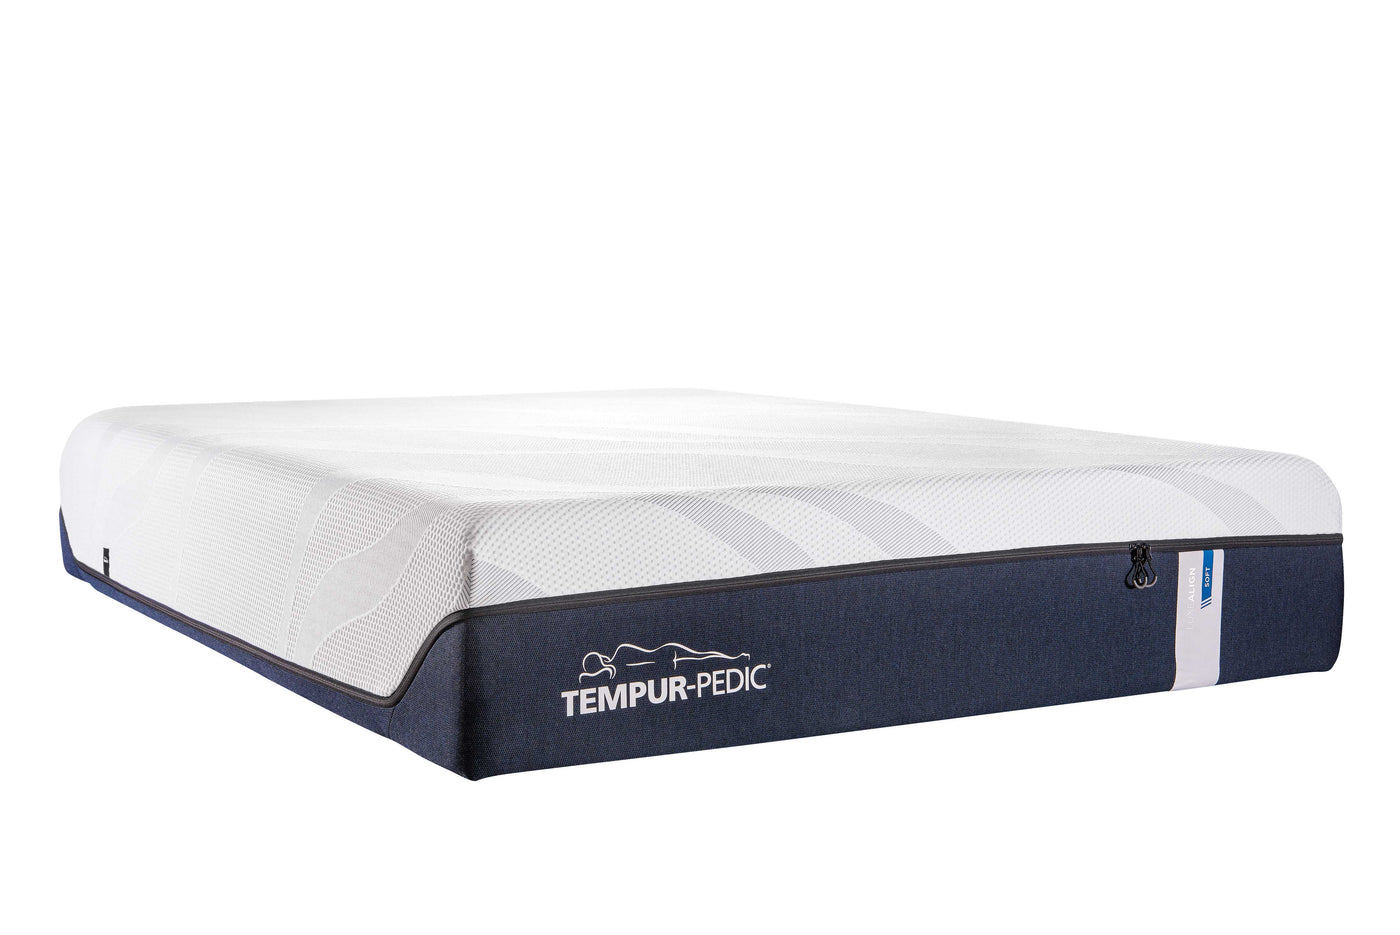 Tempur-Pedic LuxeAlign Firm Queen Mattress and Boxspring Set